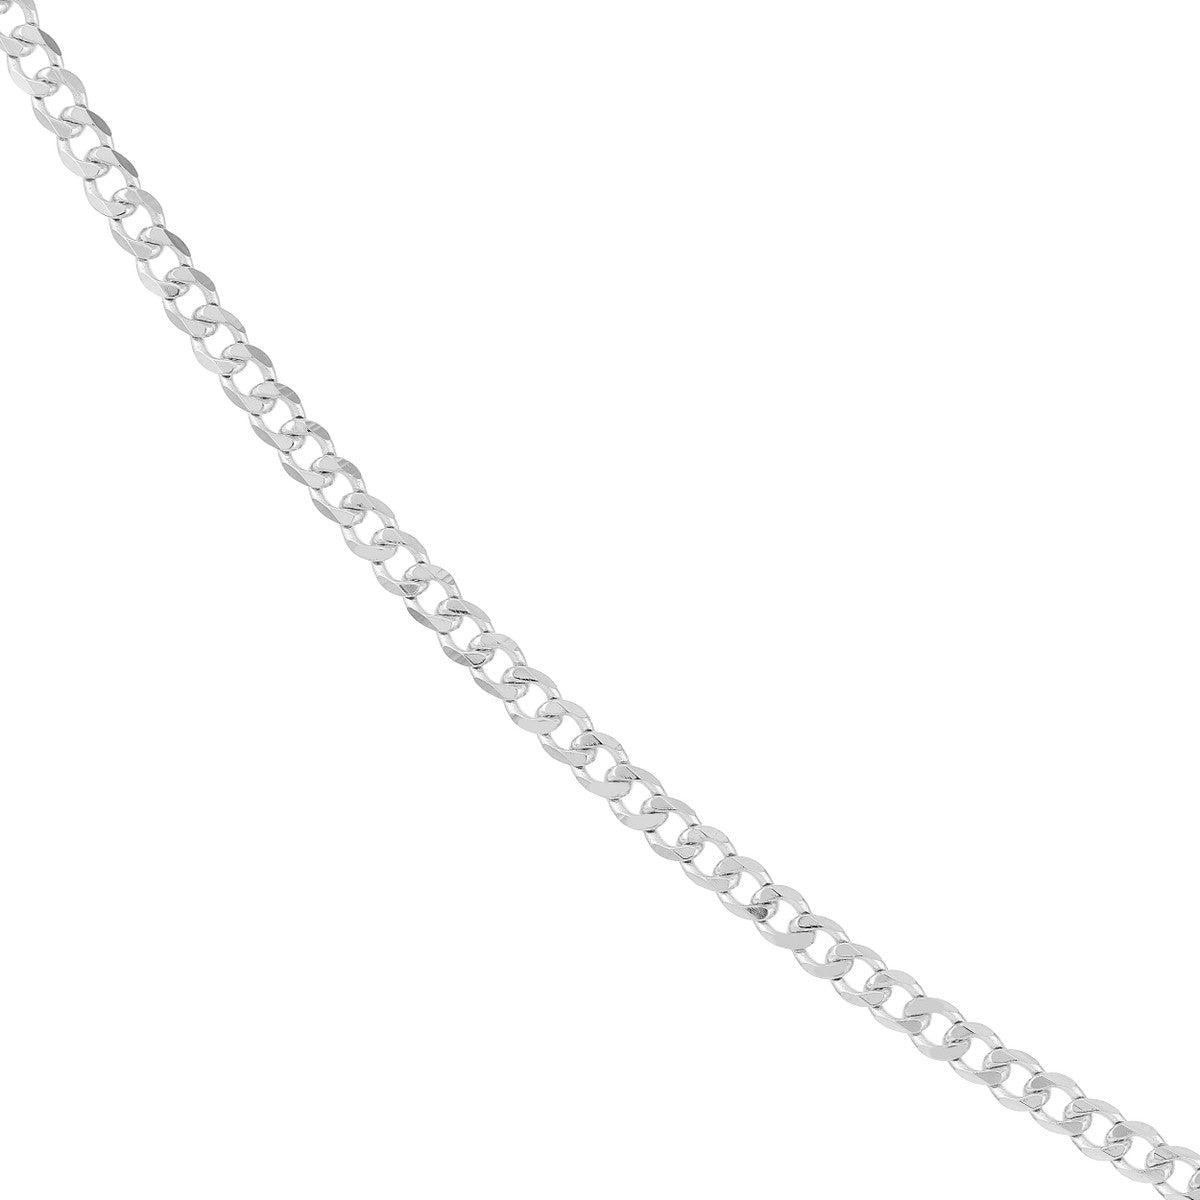 White Gold H Samuel Delicate Chain With Small Cross Pendant & Diamond | eBay